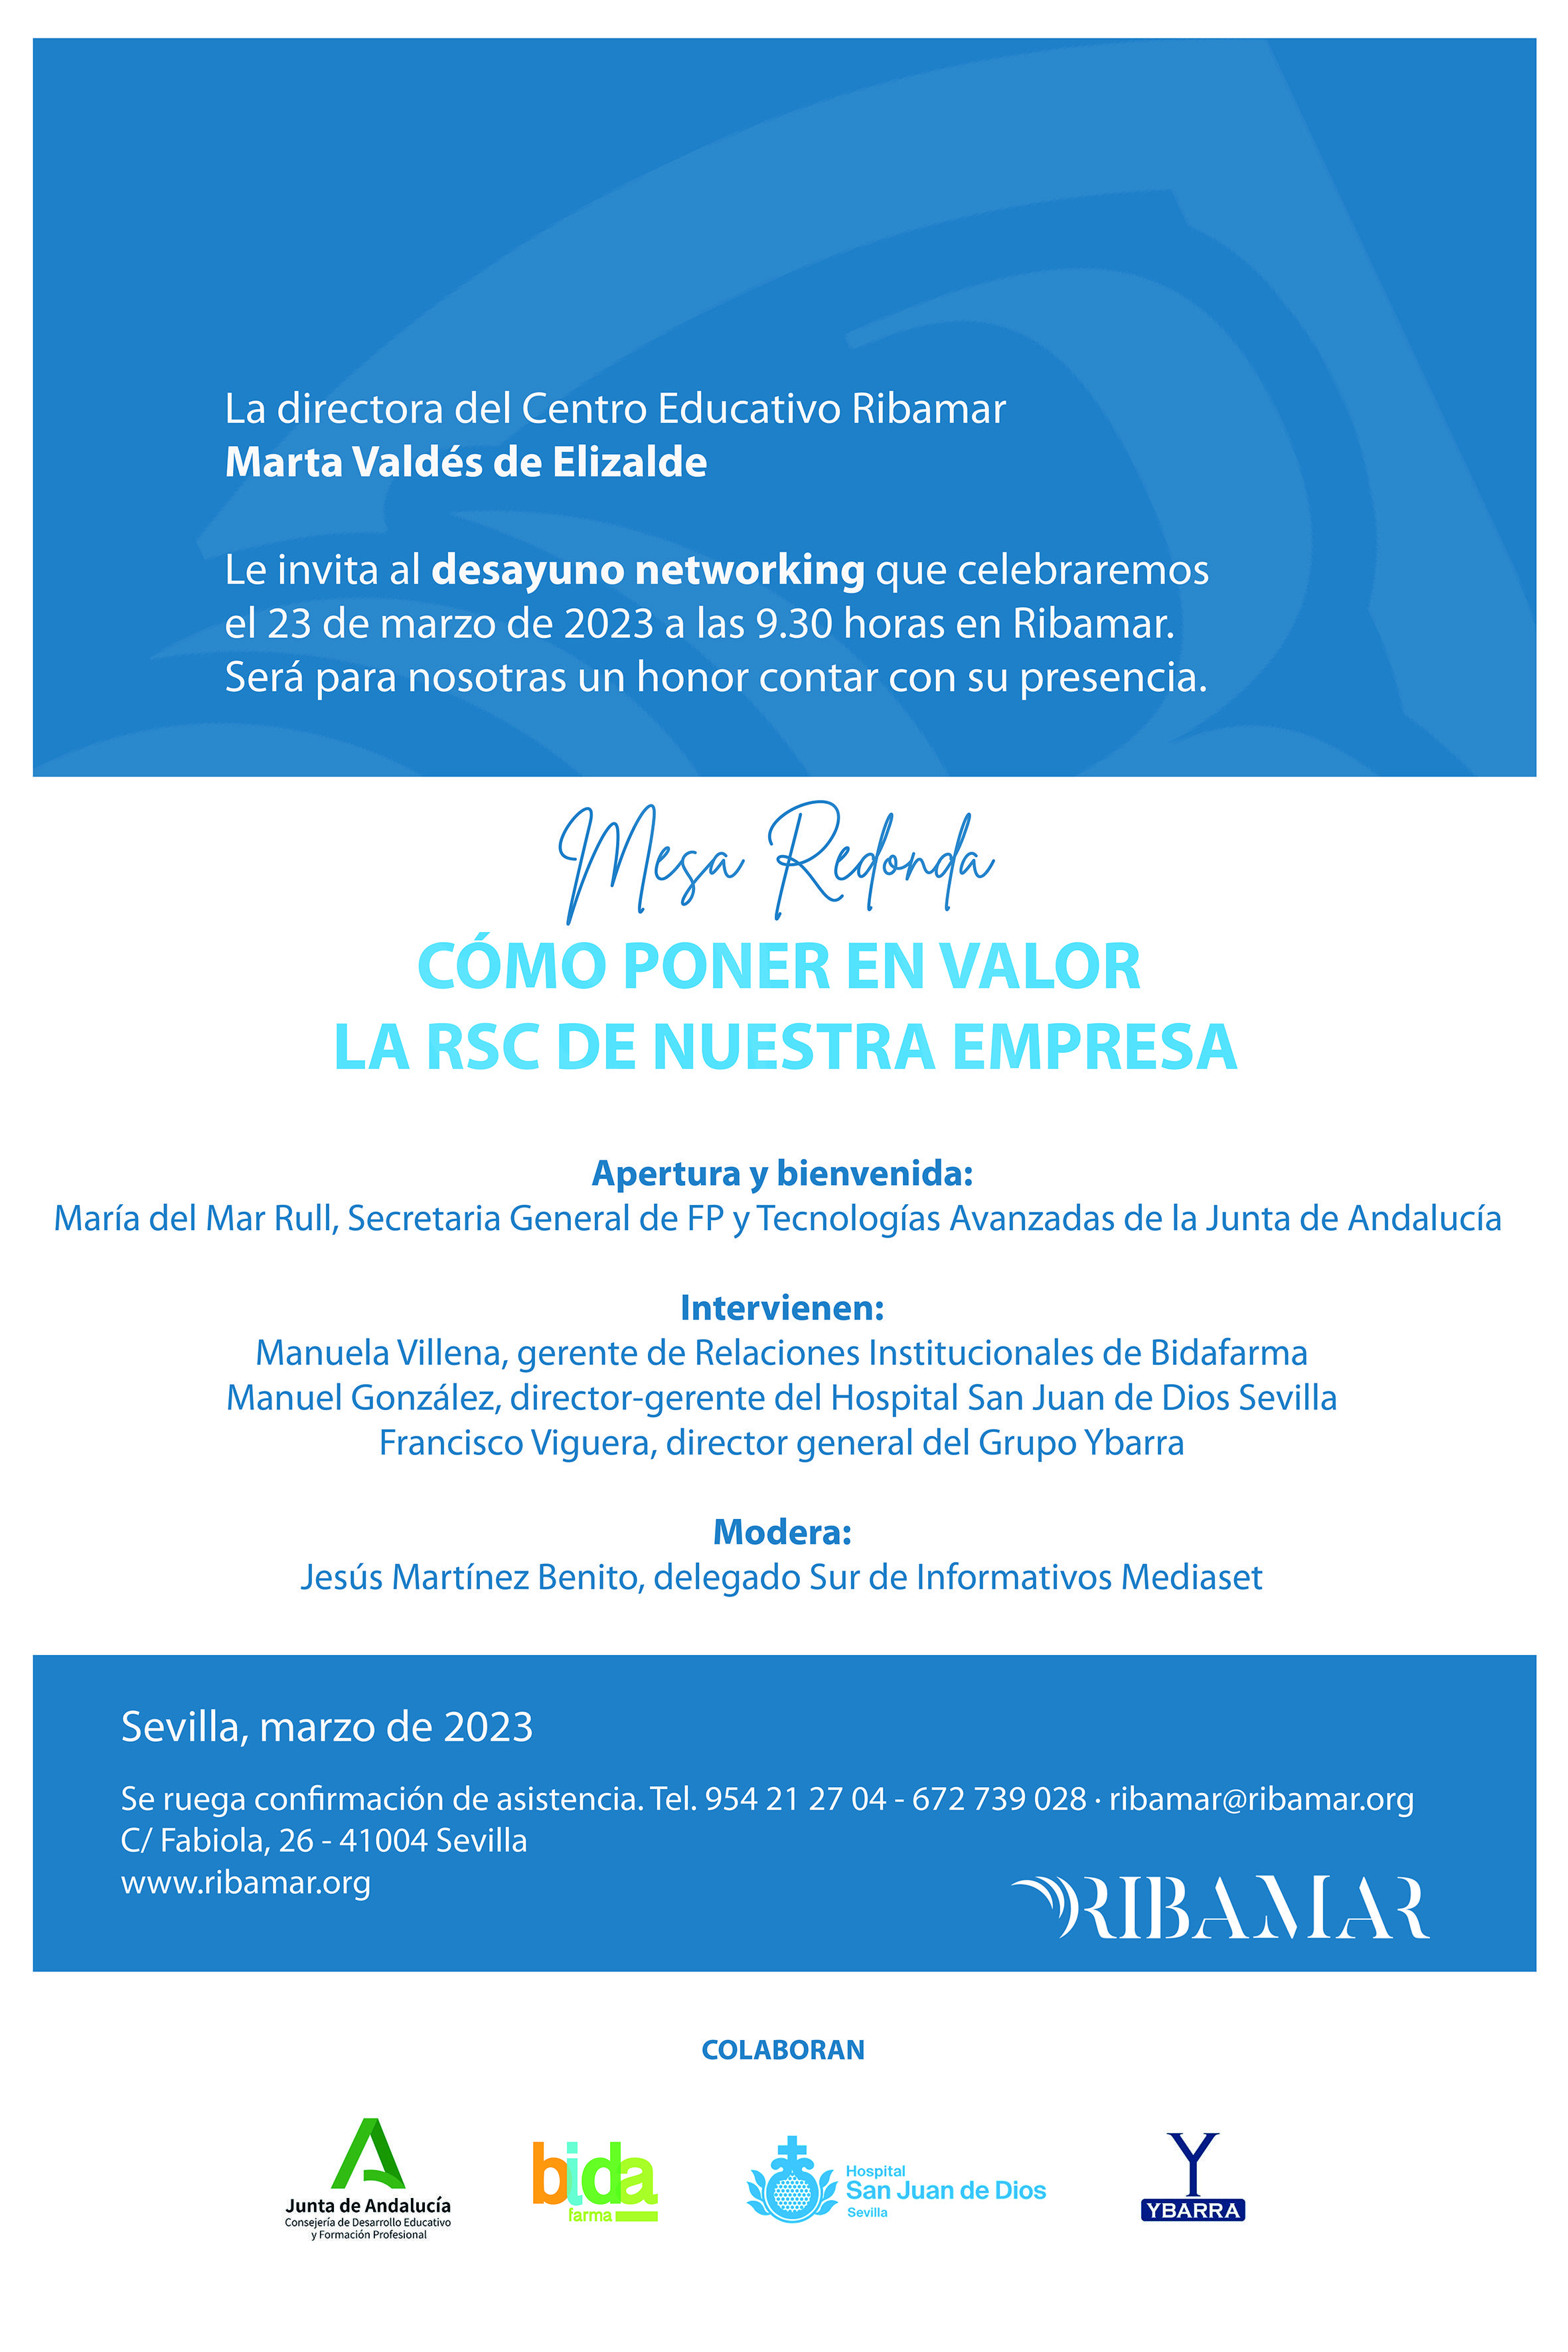 invitacion-II-desayuno-networking-Ribamar2023-RSC-Ybarra-Bidafarma-Hospital-San-Juan-De-Dios-Junta-Andalucia-Jesus-Martínez